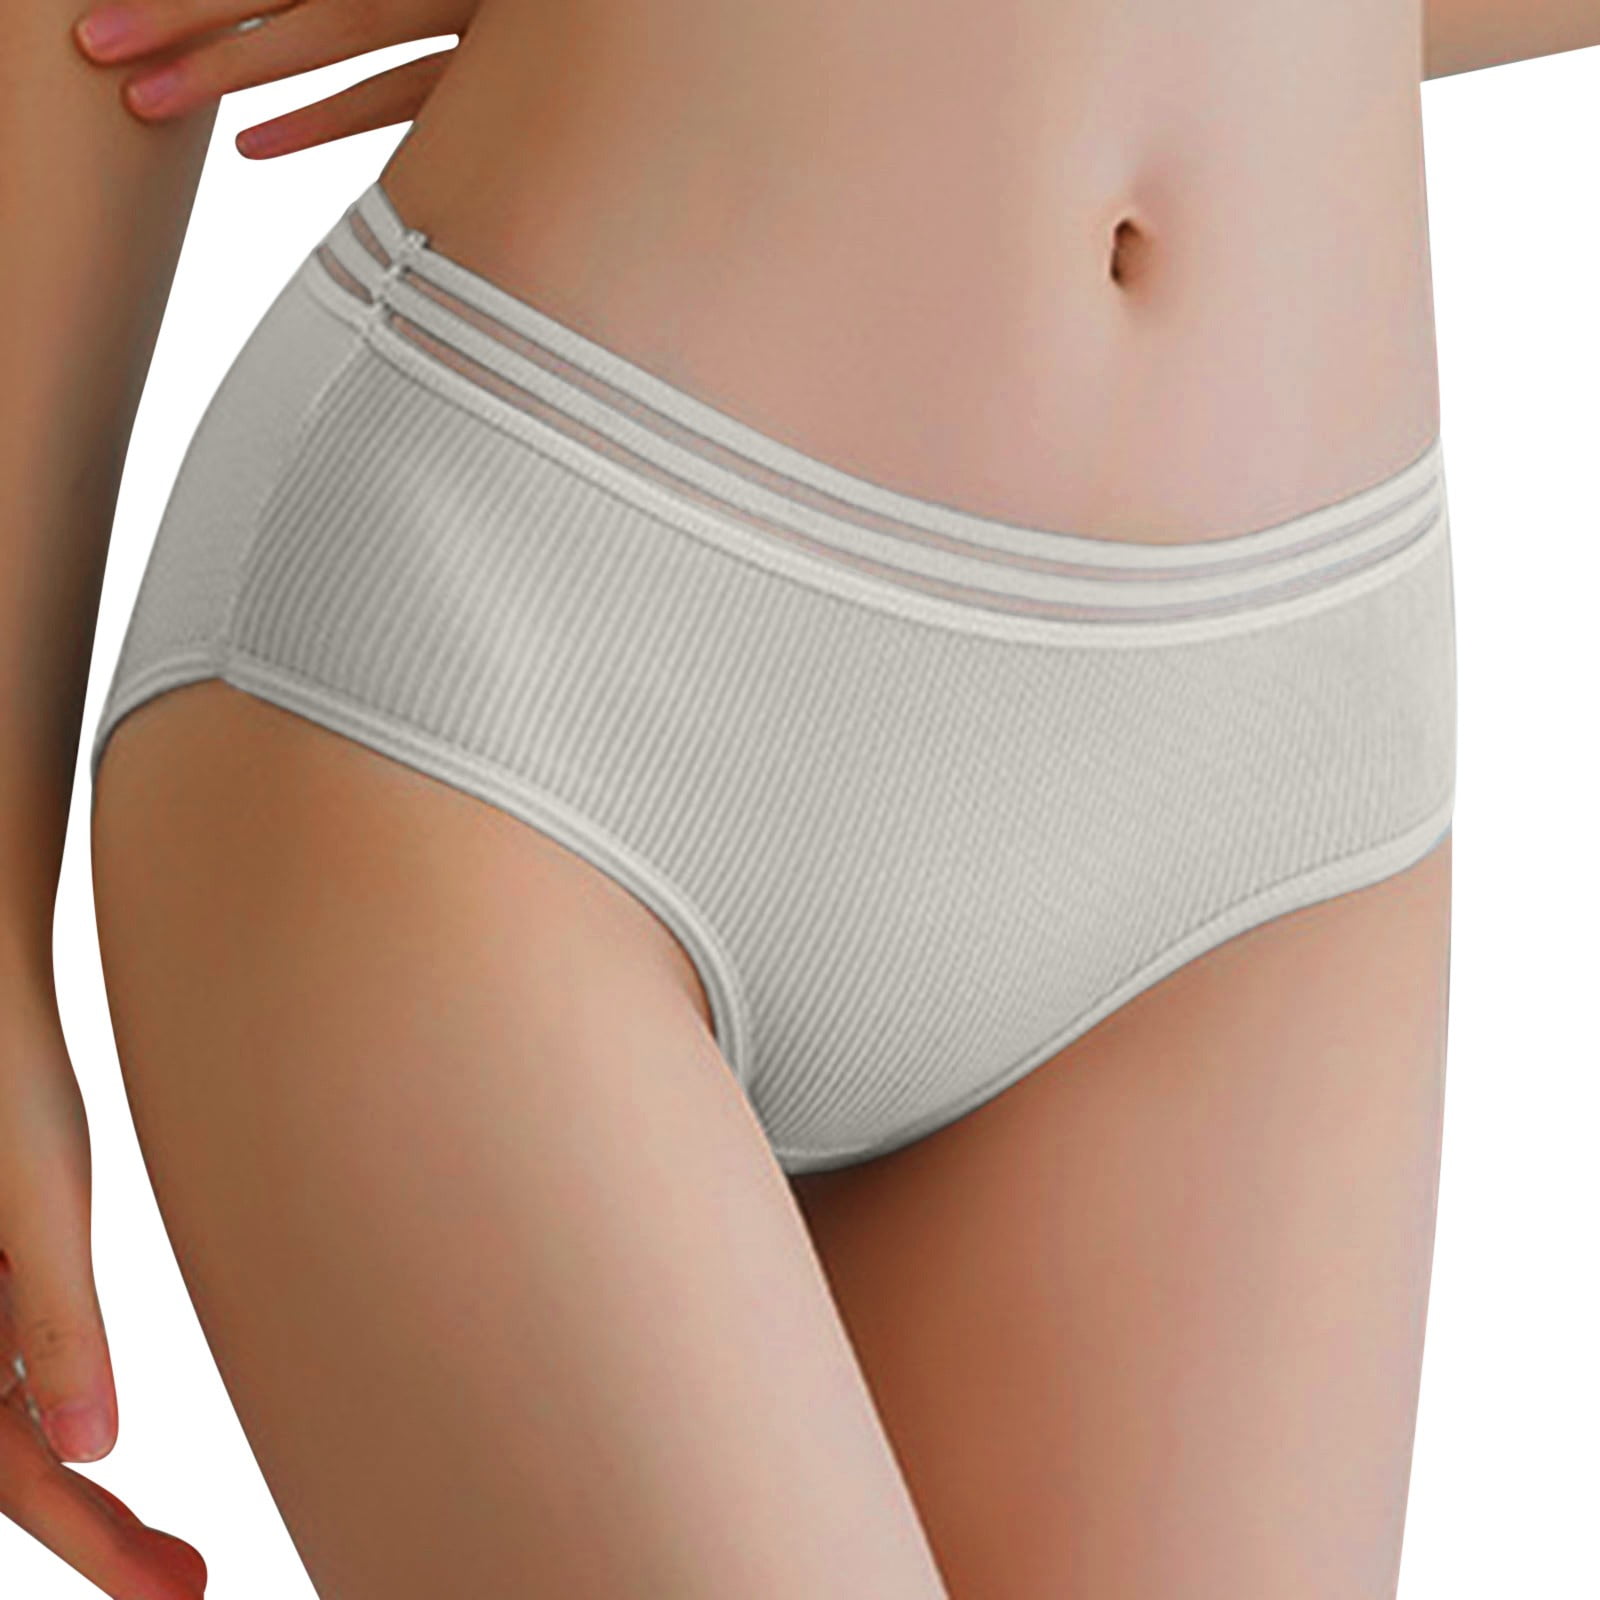 PMUYBHF Underwear For Women Cotton European And American Women'S